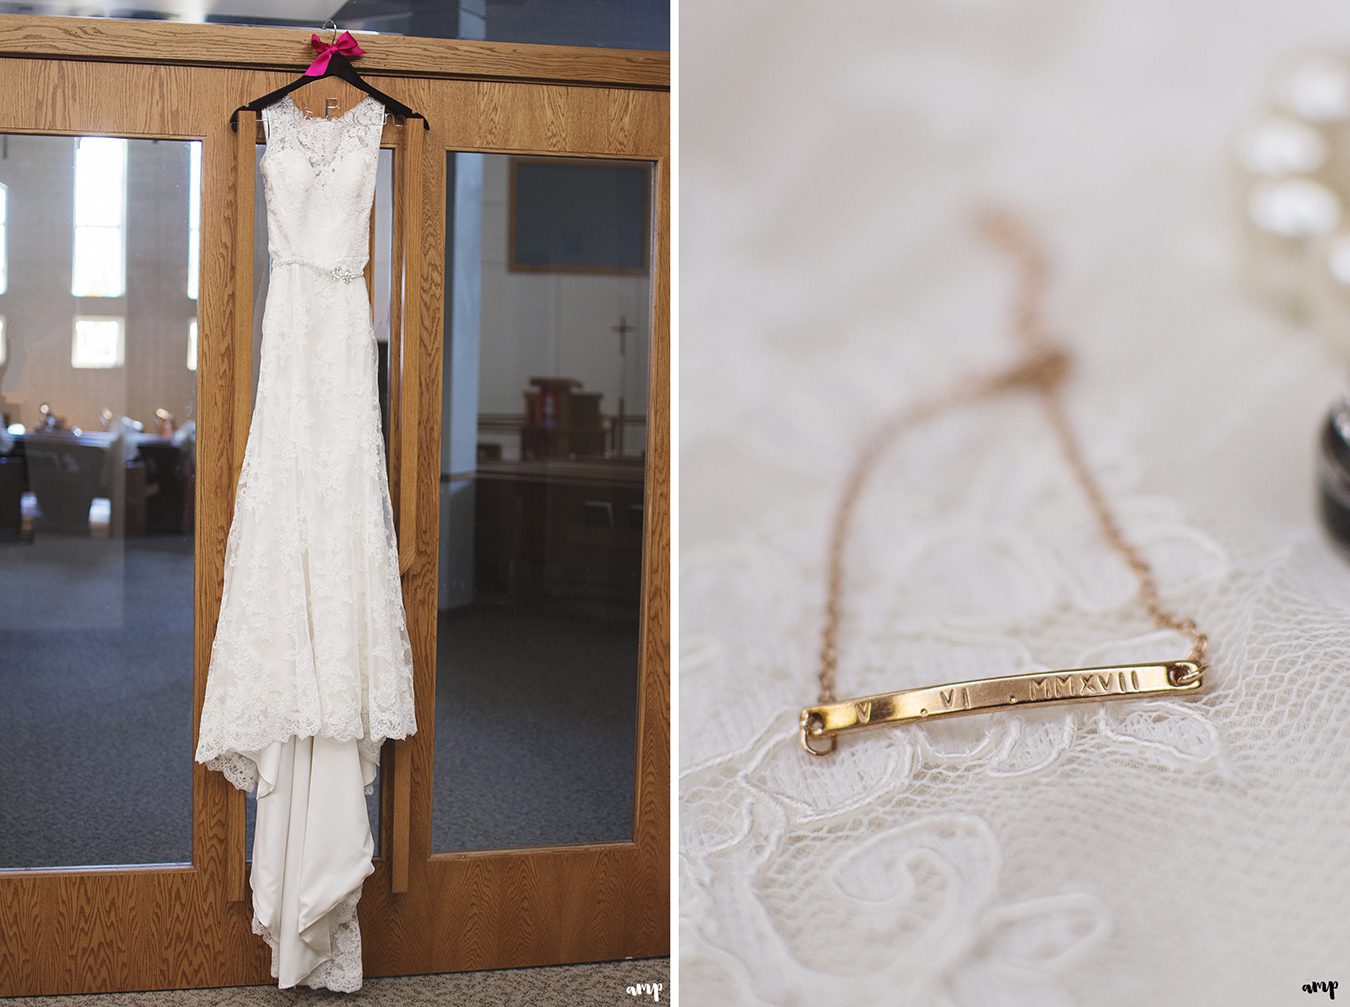 Wedding dress and bride's bracelet